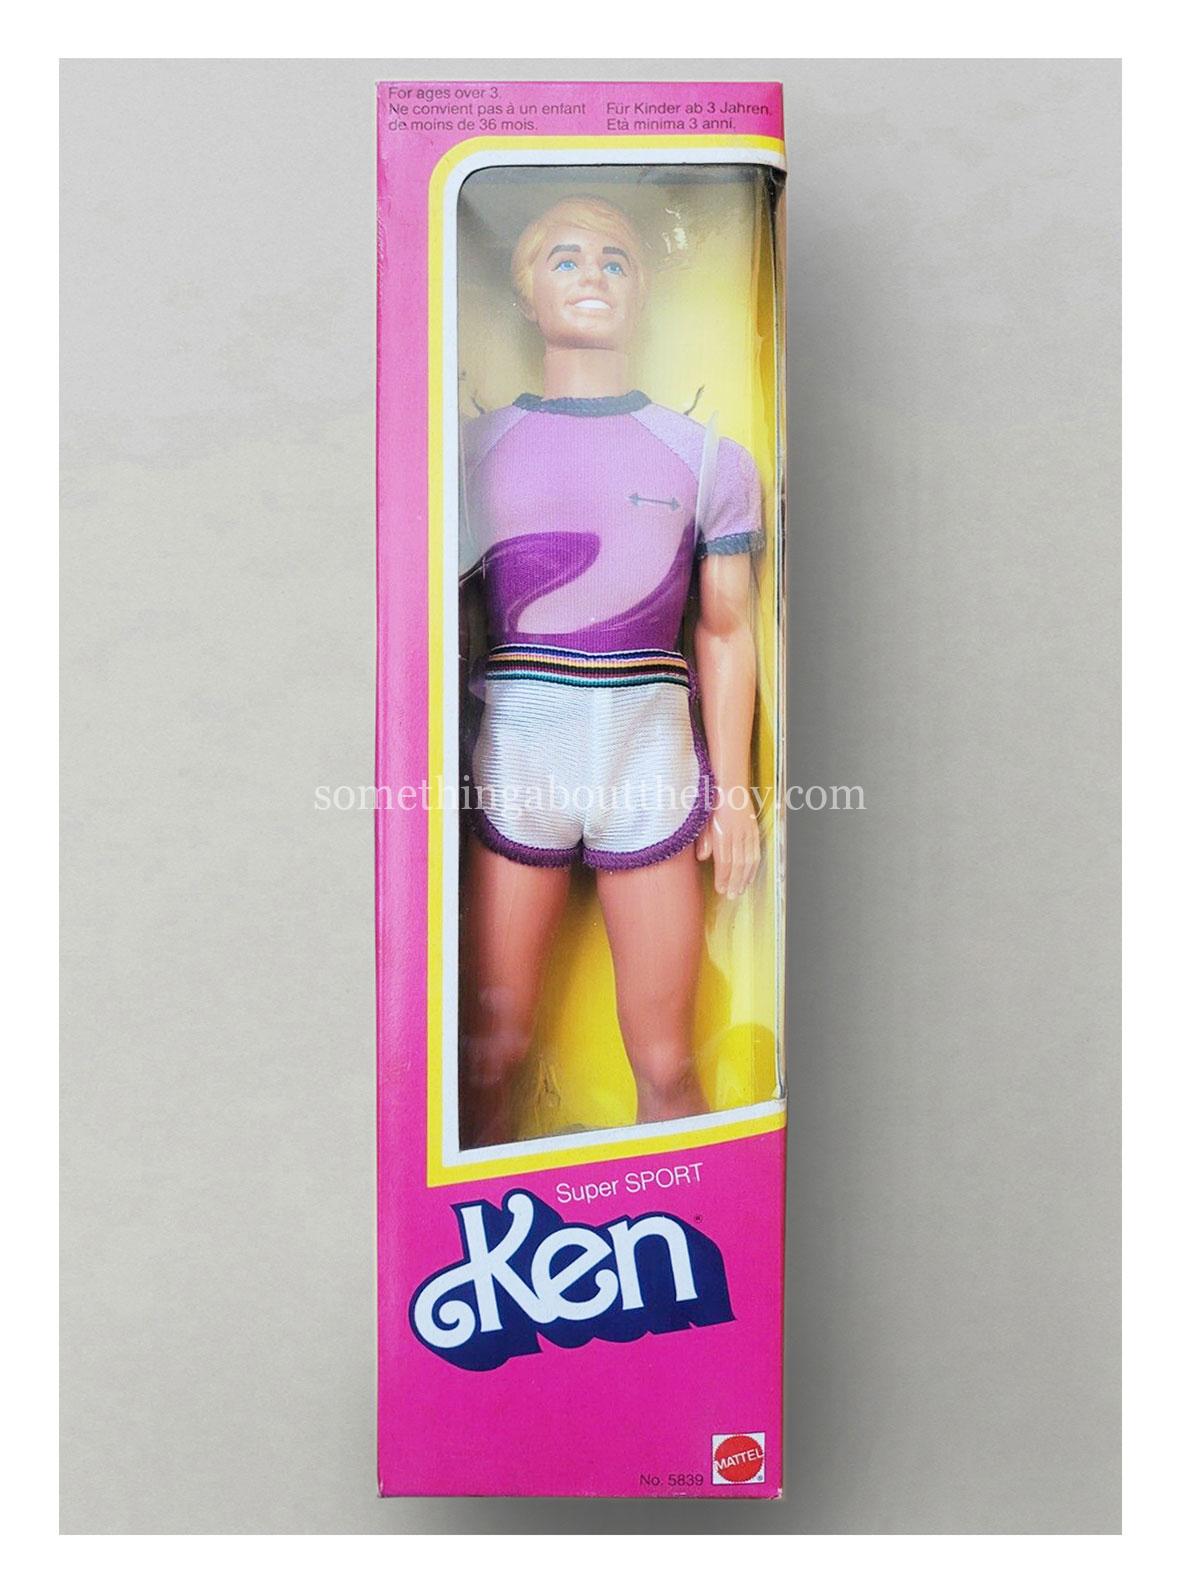 1983 #5839 Super Sport Ken in European packaging